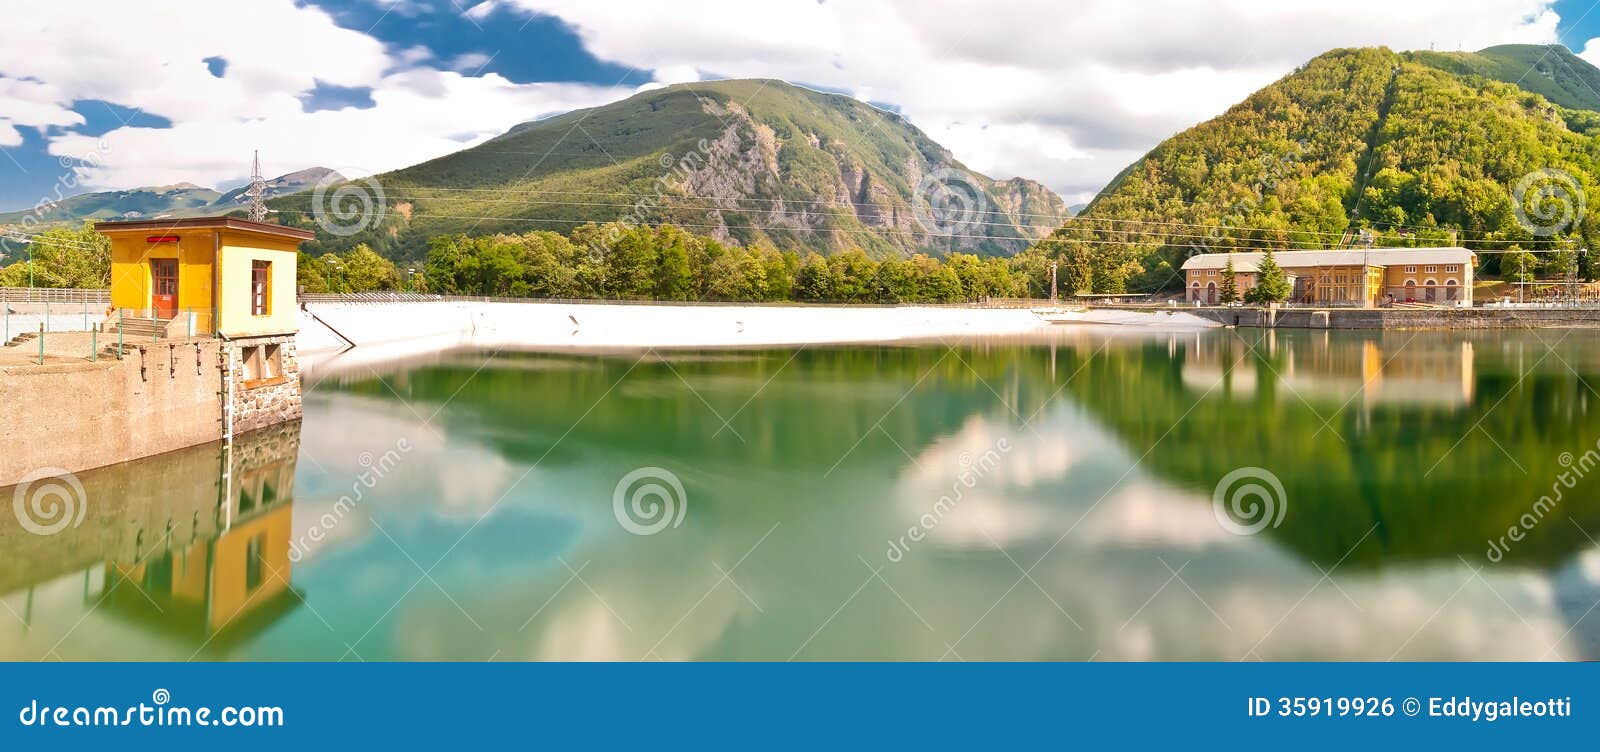 hydro-electric power plant and lake in ligonchio, emilia apennines, italy